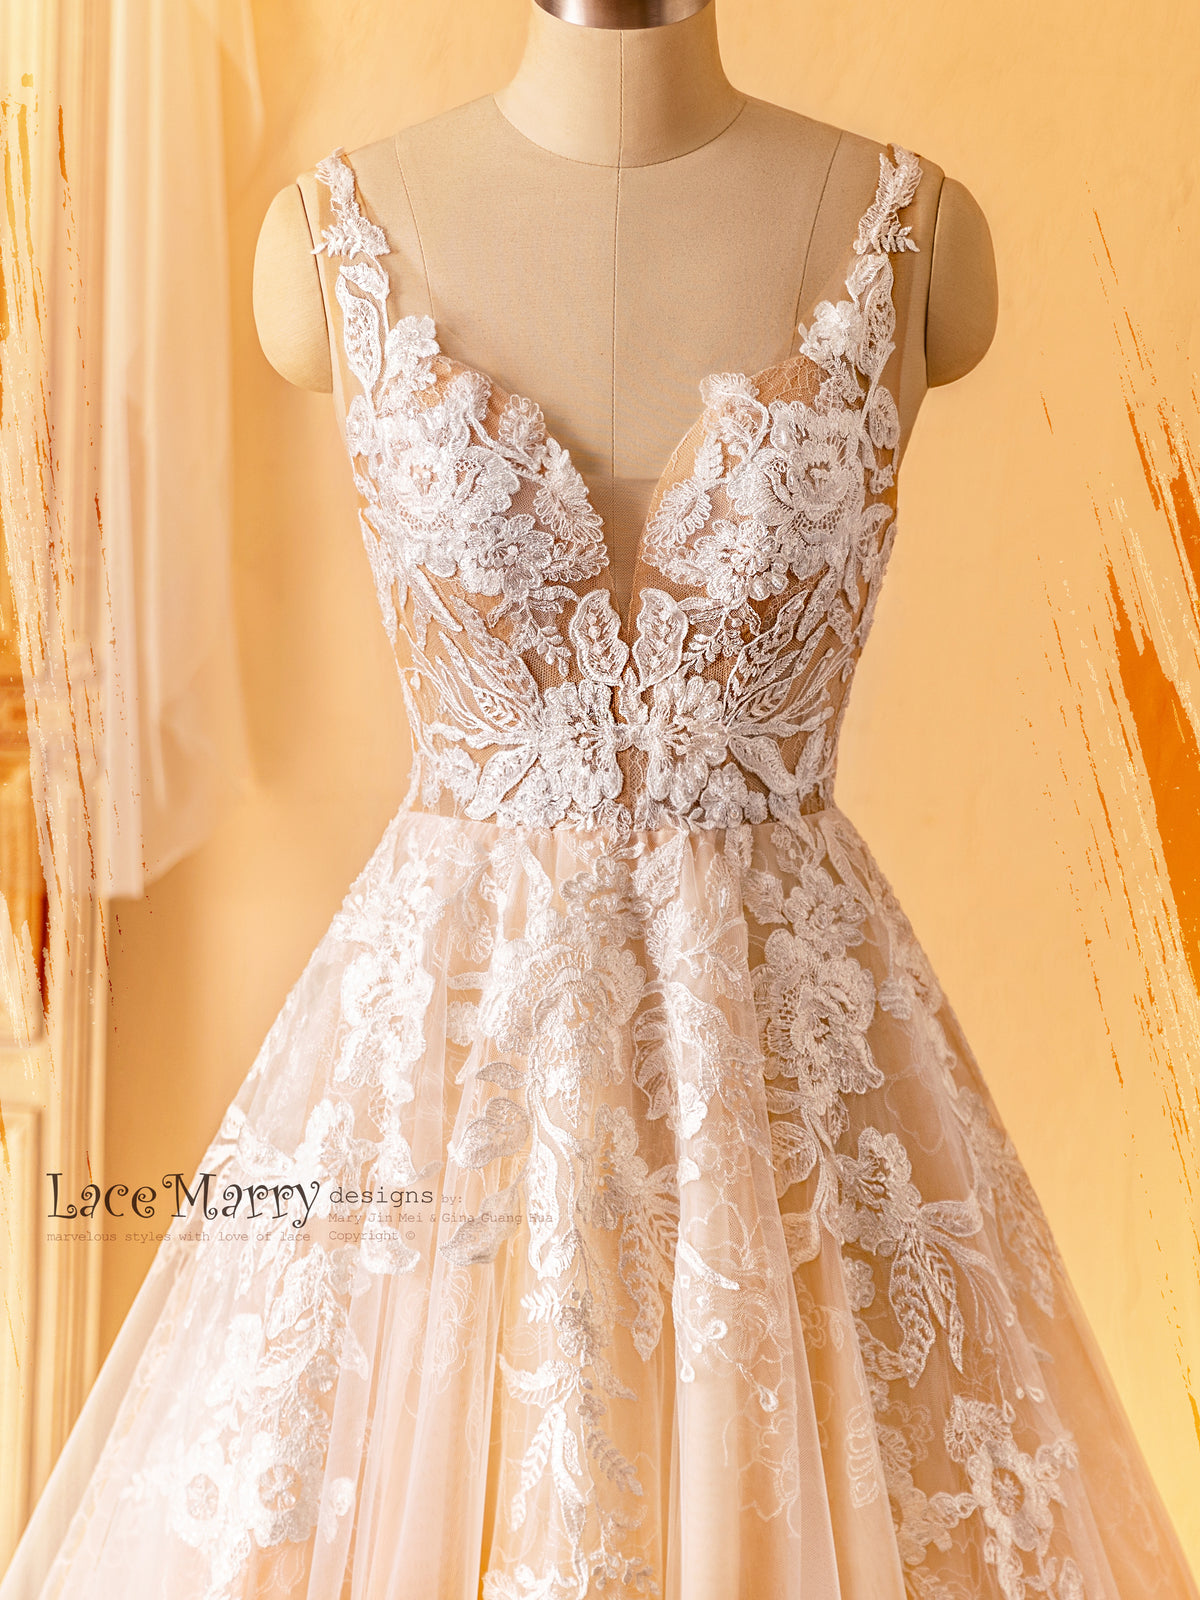 Breathtaking Lace Design Wedding Dress